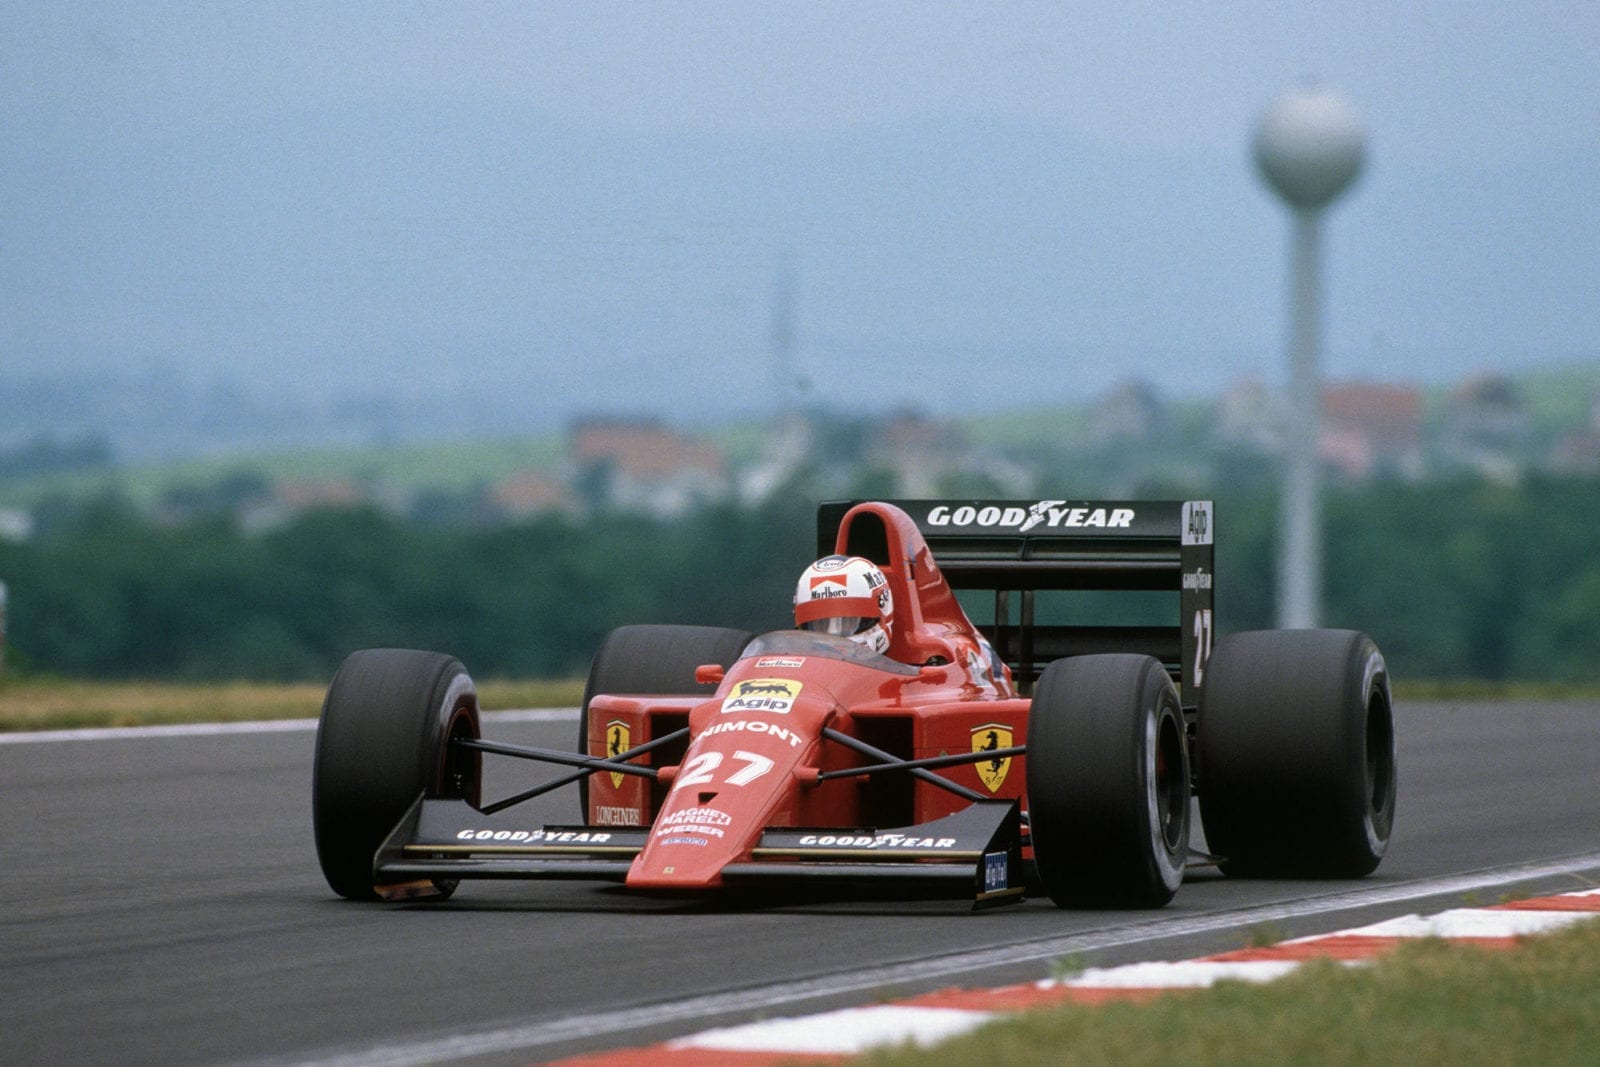 1989 HUN GP feature